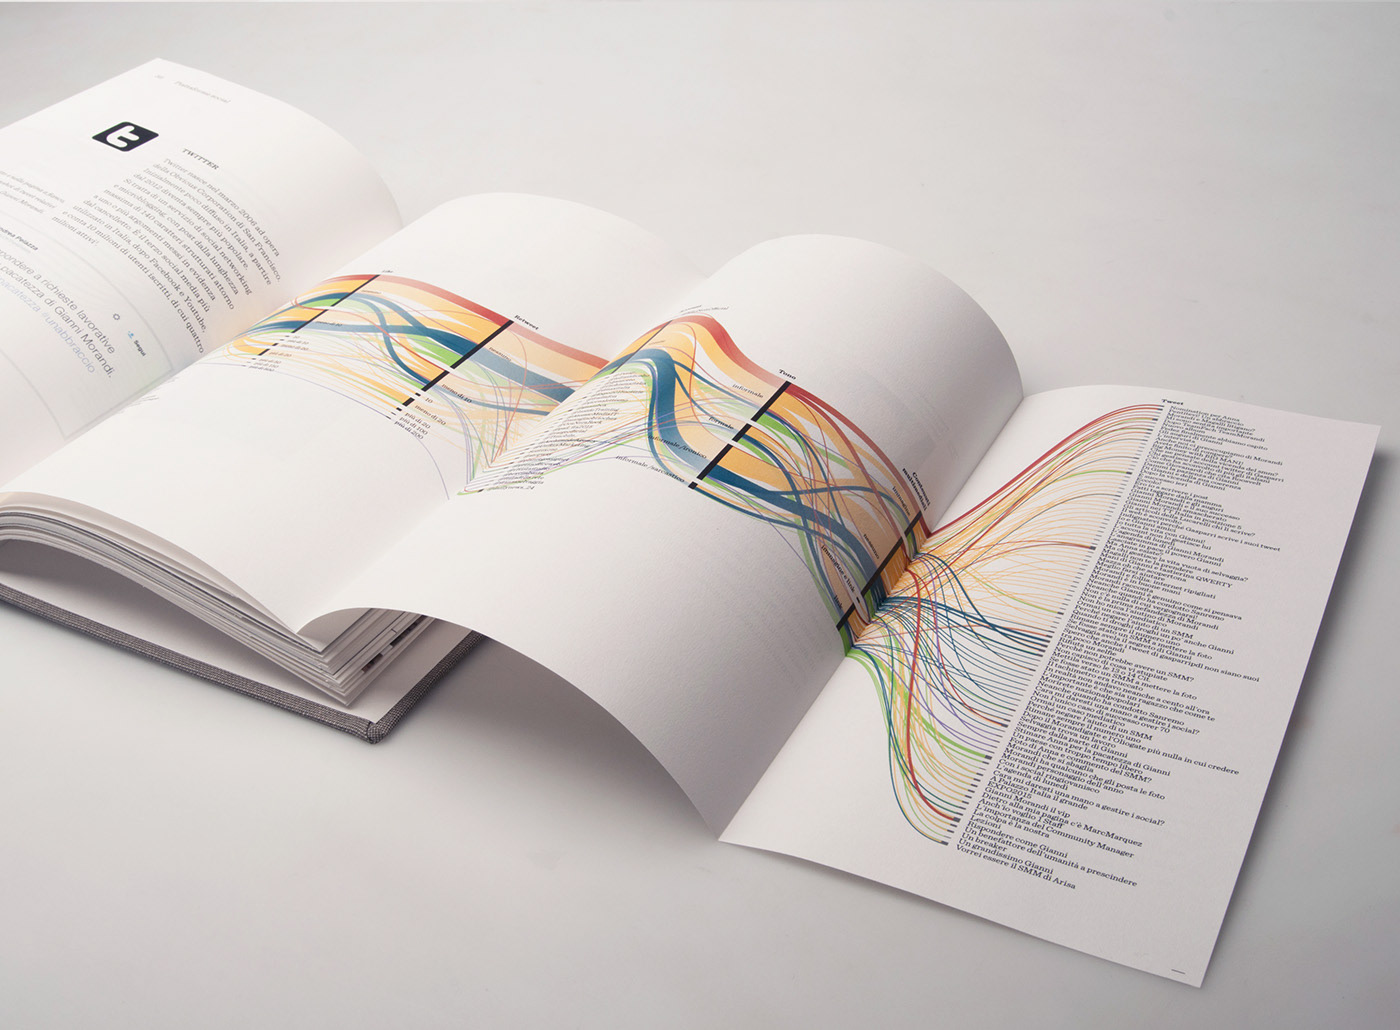 infografica infographic Bookbinding binding fb facebook dataviz visualization viz gianni morandi